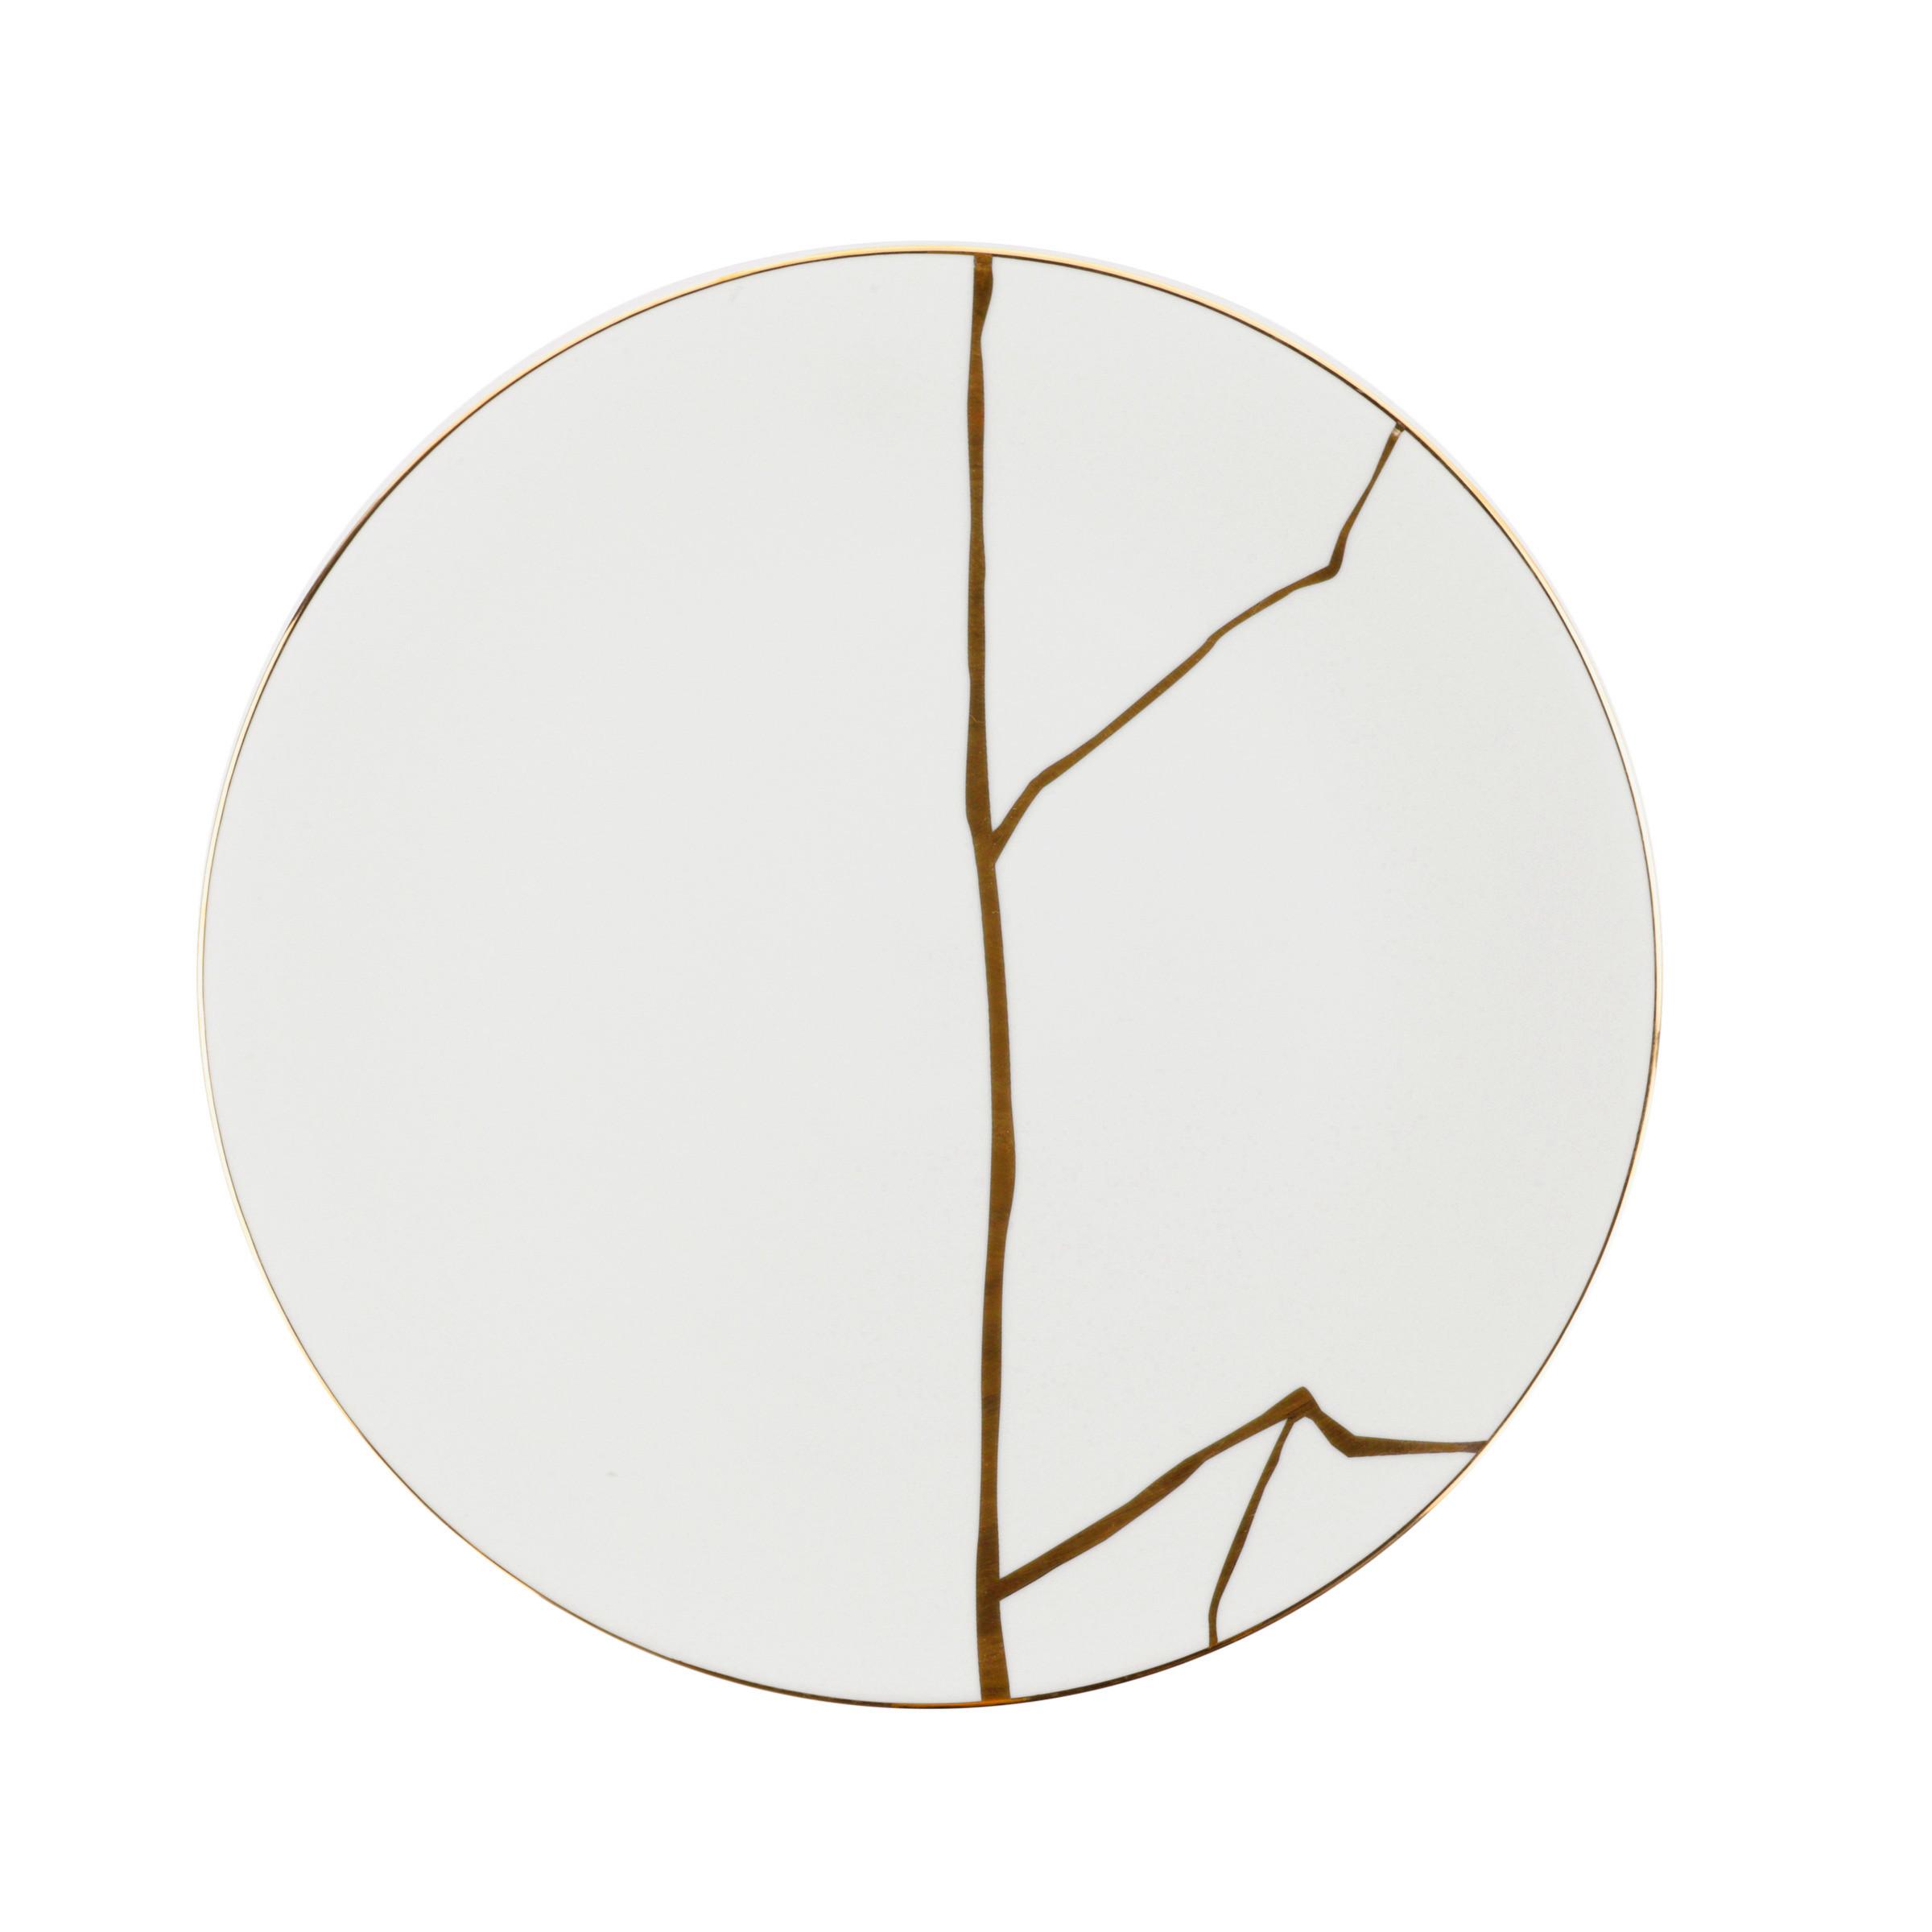 Plitki Tanjur 27 Cm Onix - bijela/zlatne boje, Modern, keramika (27cm) - Premium Living